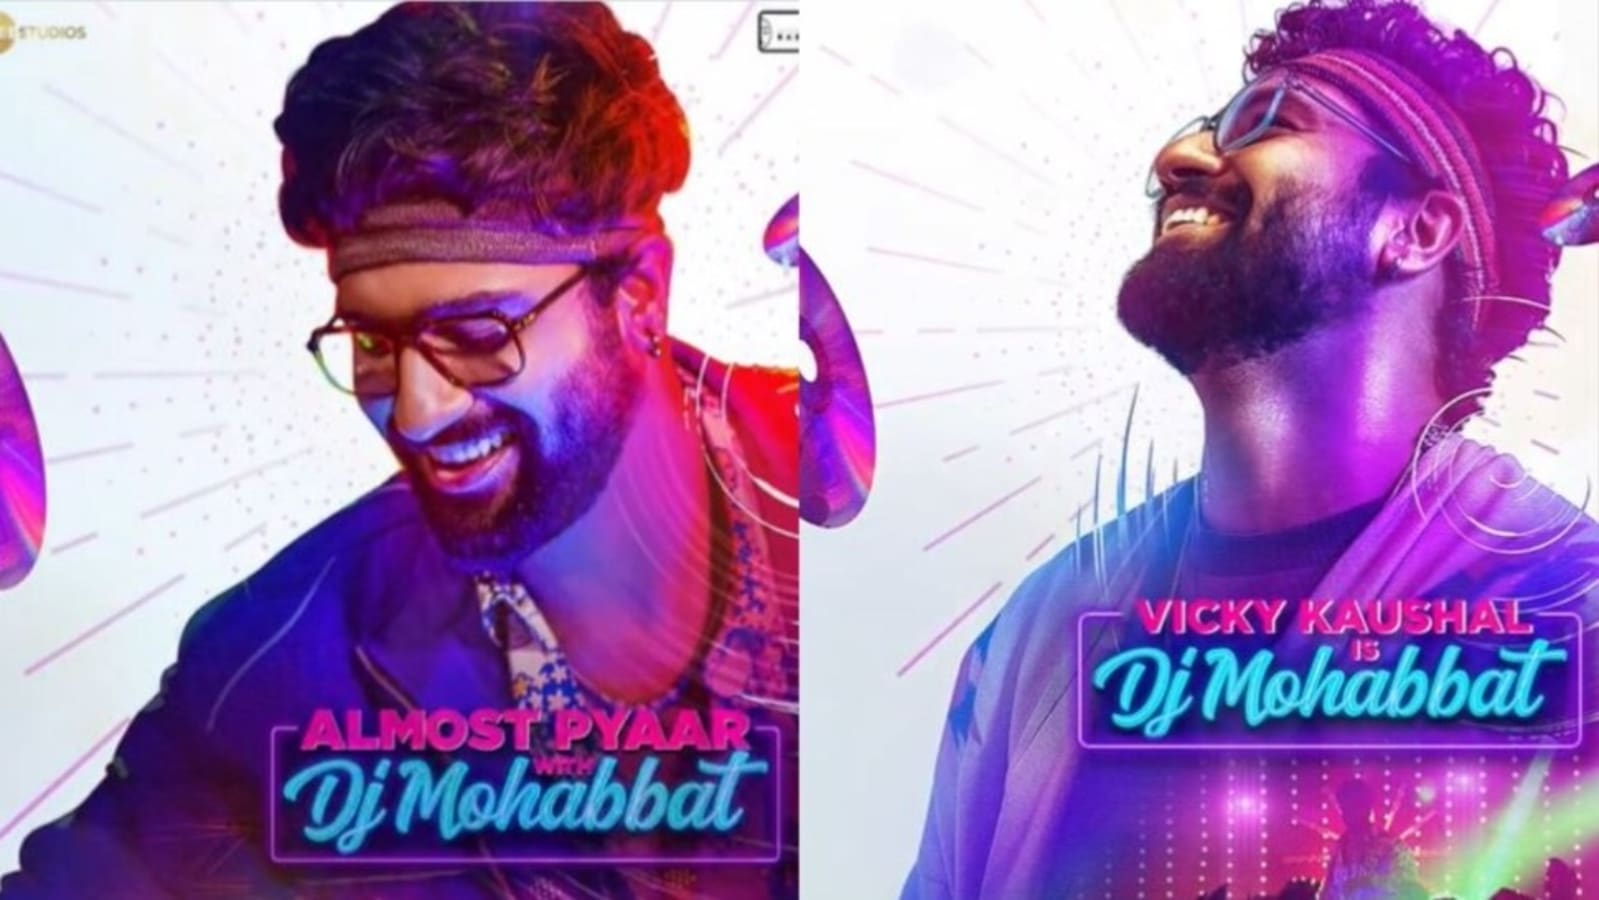 Vicky Kaushal to play DJ Mohabbat in Almost Pyaar with DJ Mohobbat ...